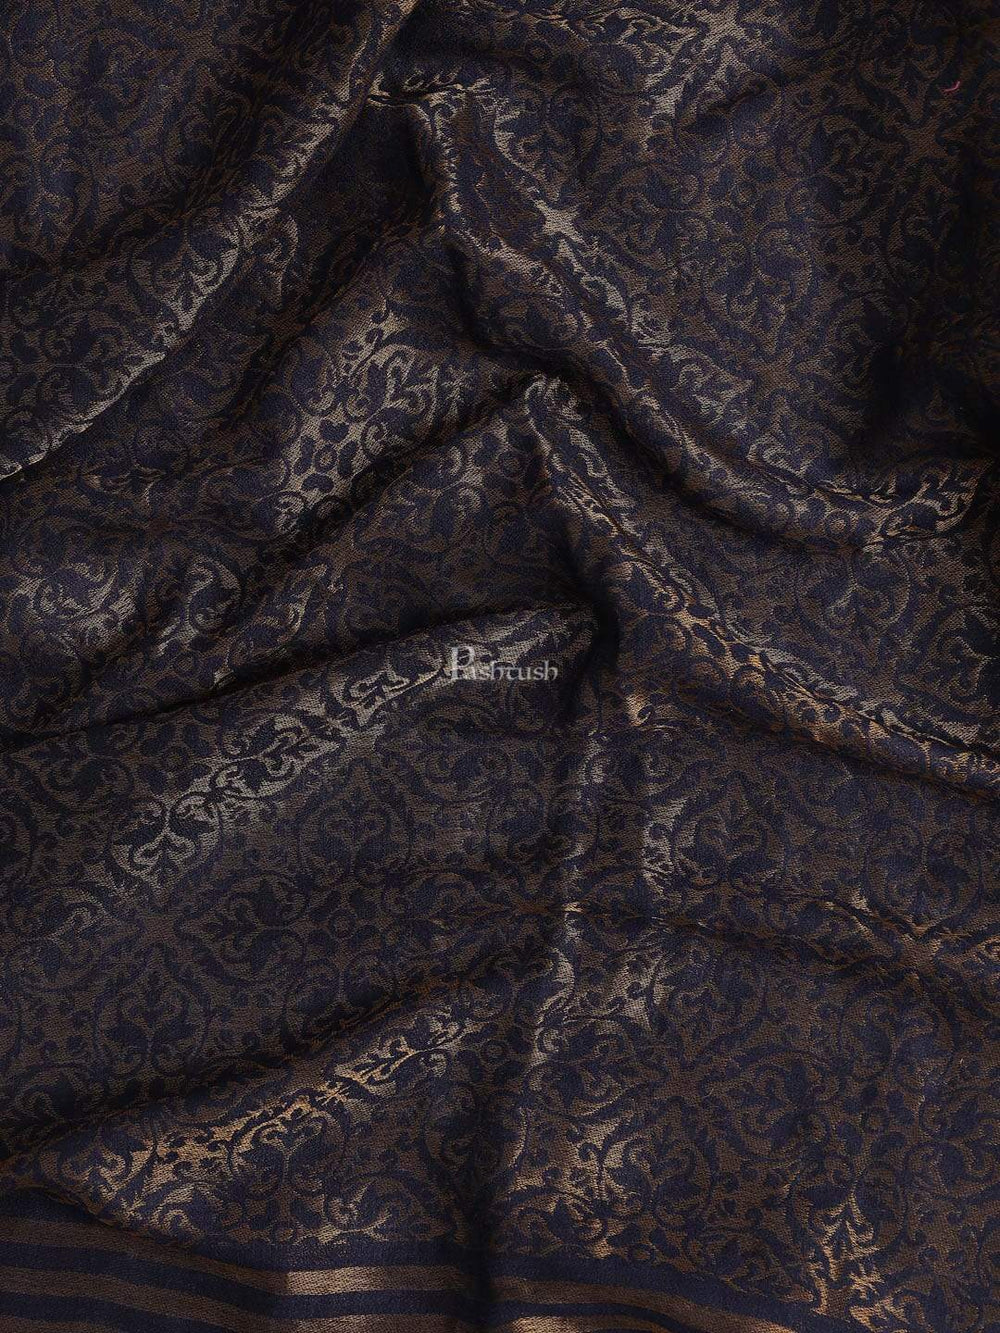 Pashtush India 100x200 Pashtush Mens Twilight Collection, Jacquard Stole, With Metallic Thread Weave, Fine Wool